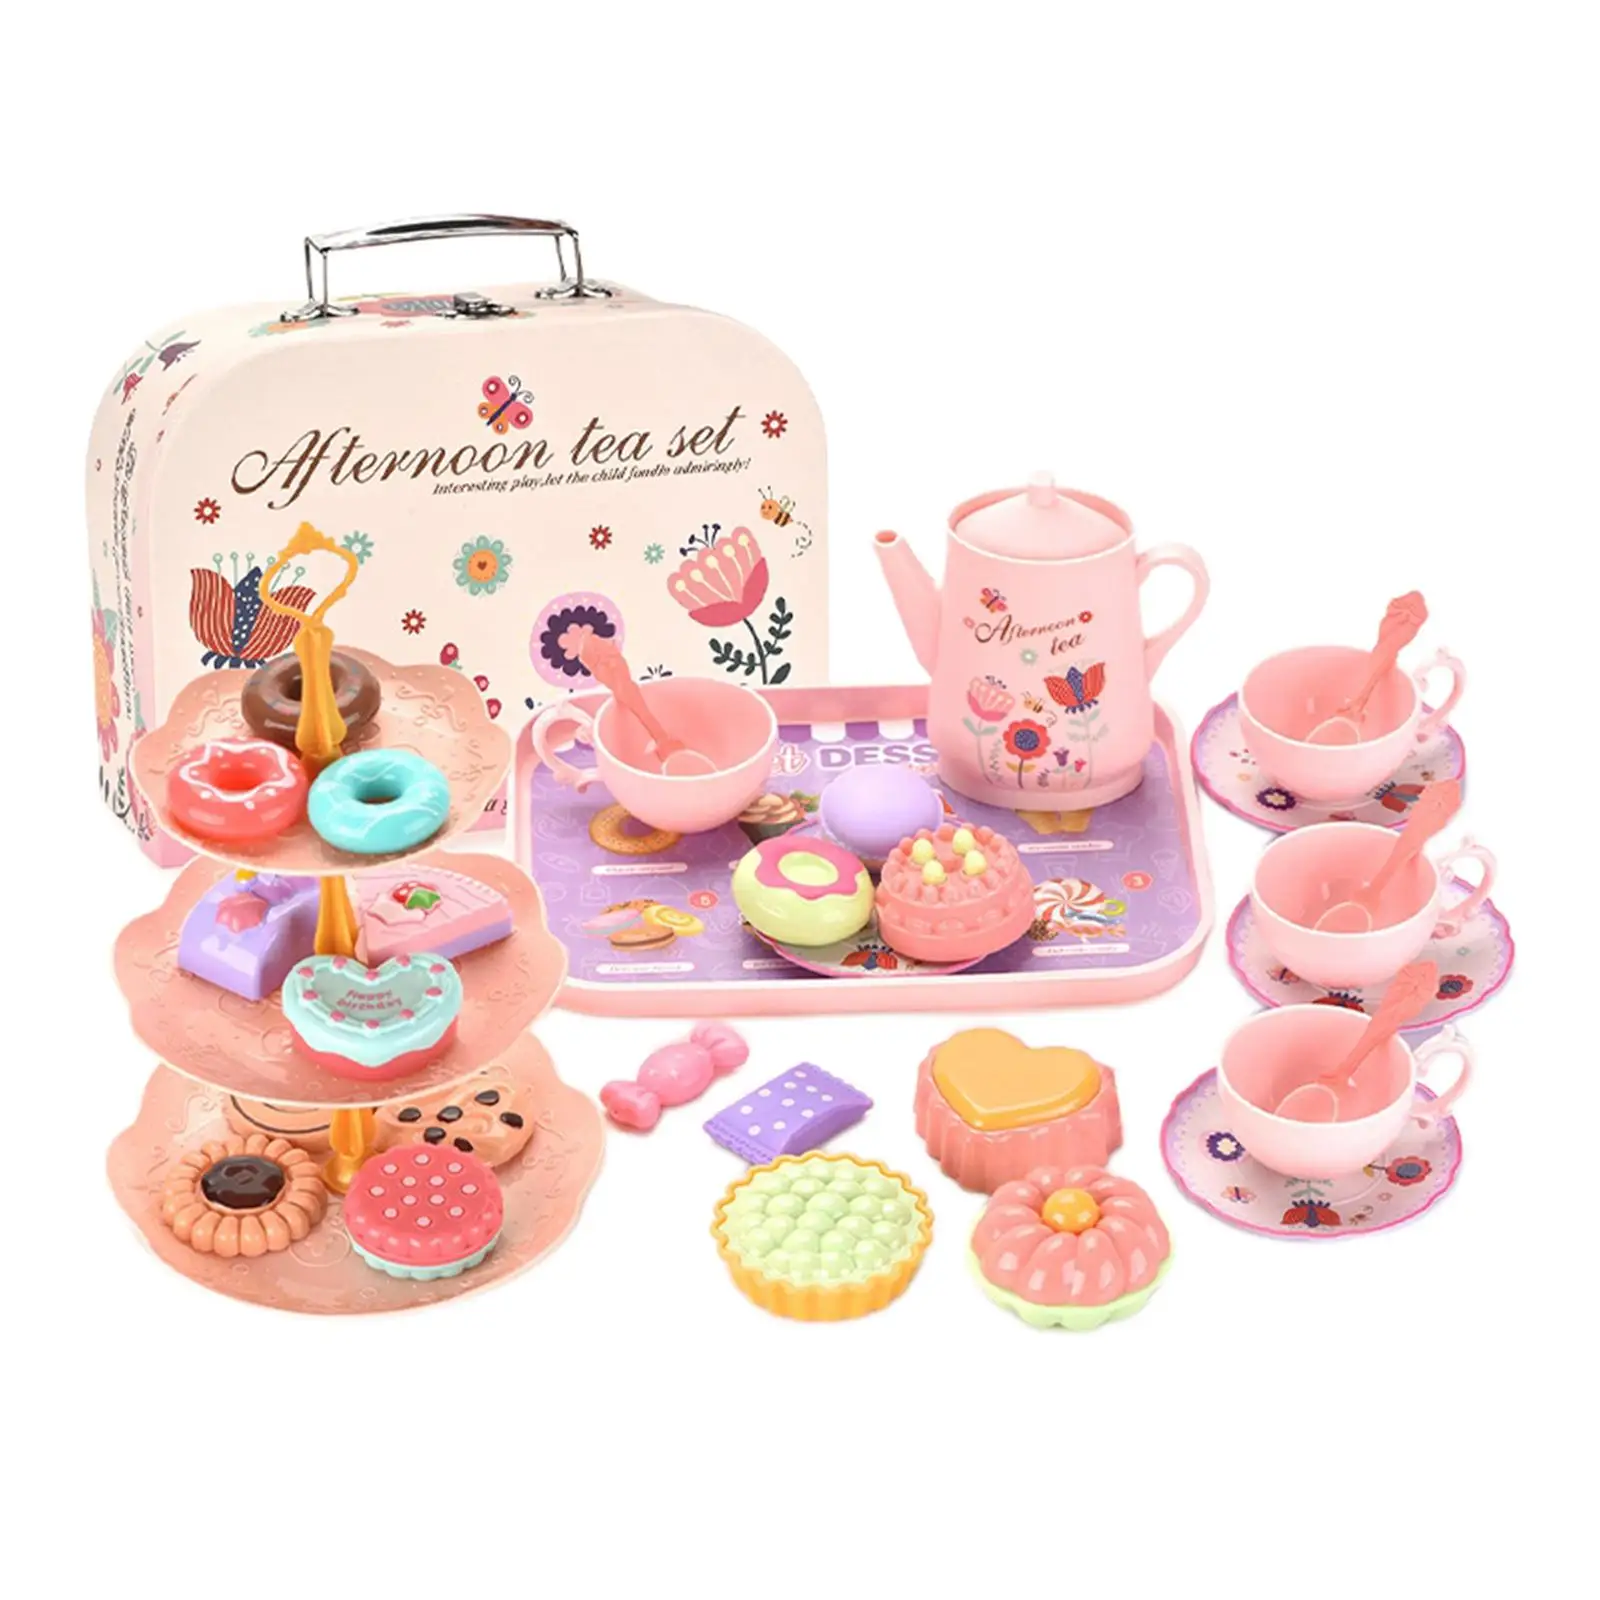 Simulation Tea Cake Set Montessori Toy Girls Toys DIY Pretend Role play Early